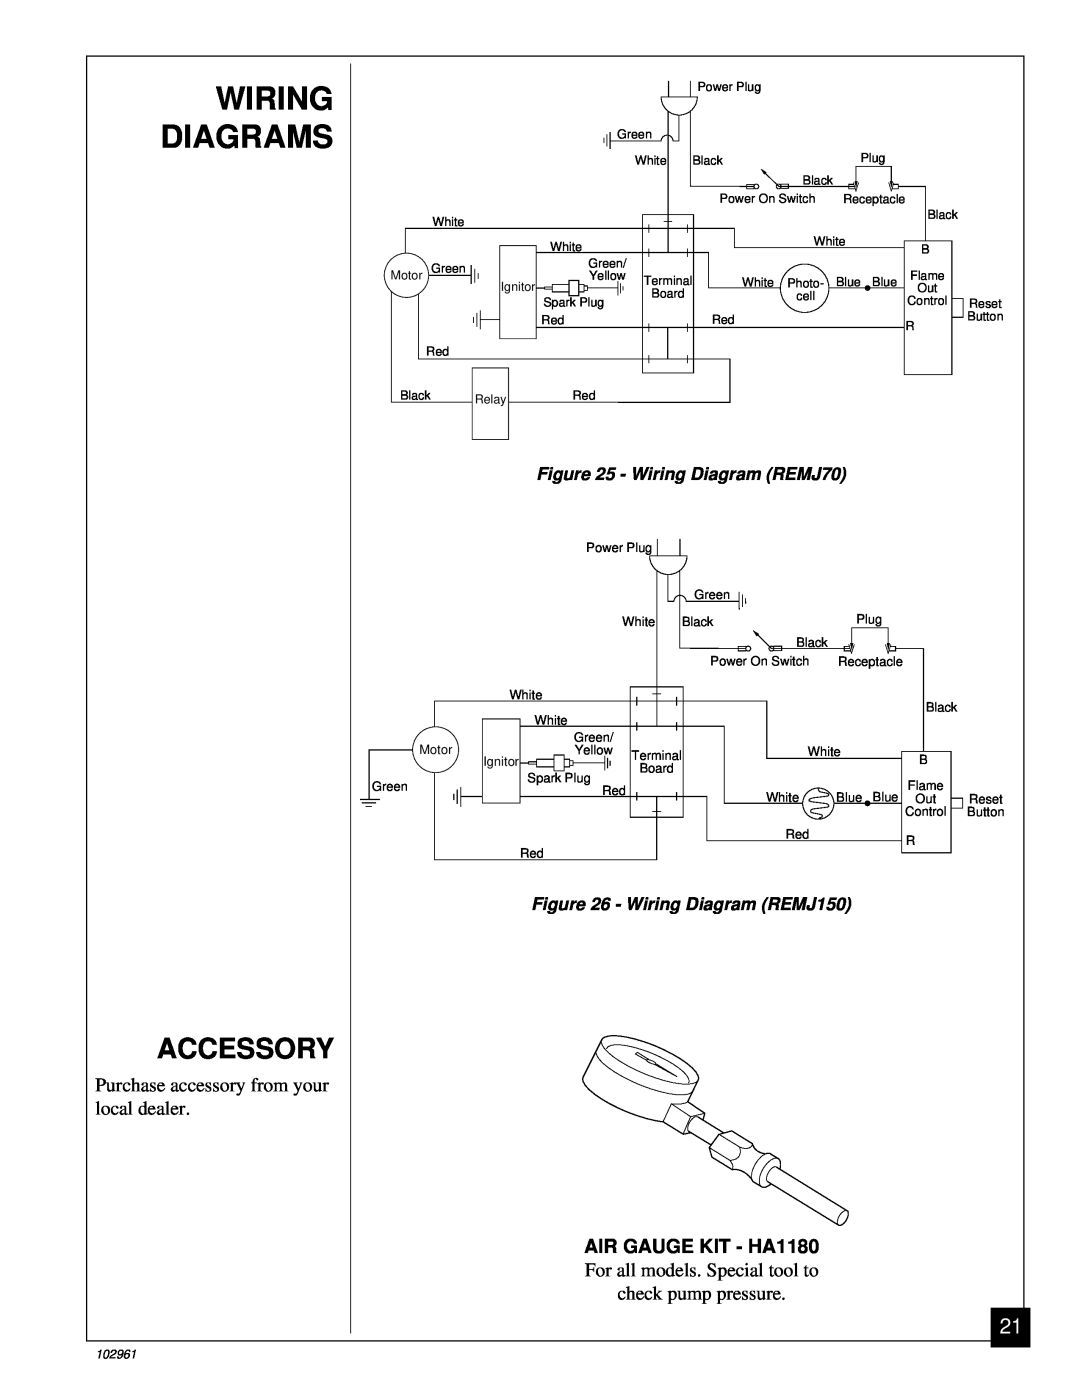 Remington owner manual Diagrams, Accessory, AIR GAUGE KIT - HA1180, Wiring Diagram REMJ70, Wiring Diagram REMJ150 